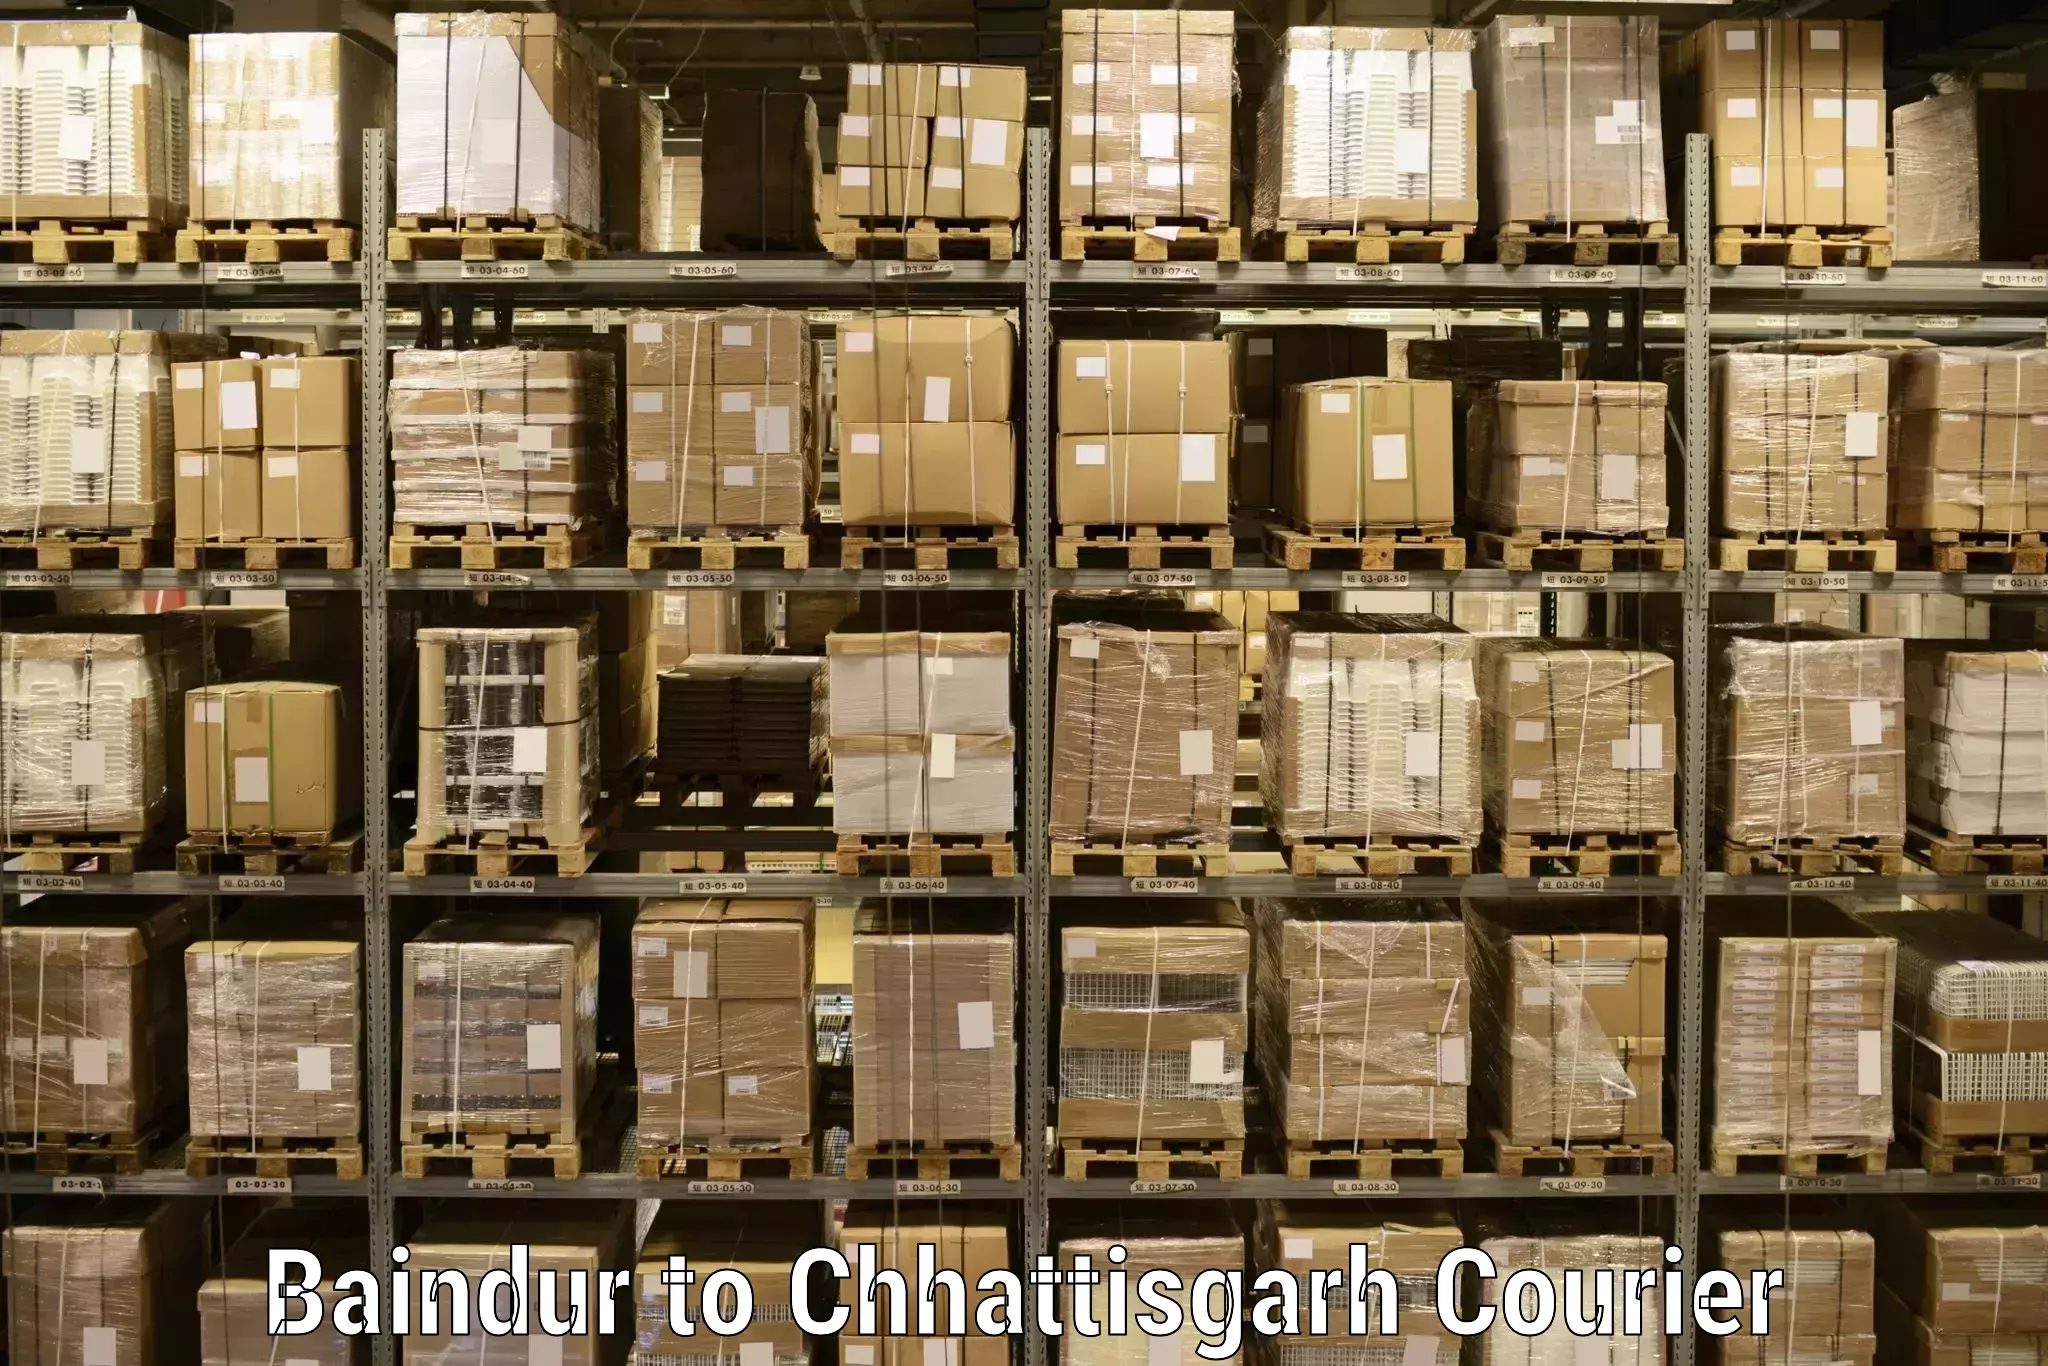 Courier service comparison Baindur to Bijapur Chhattisgarh